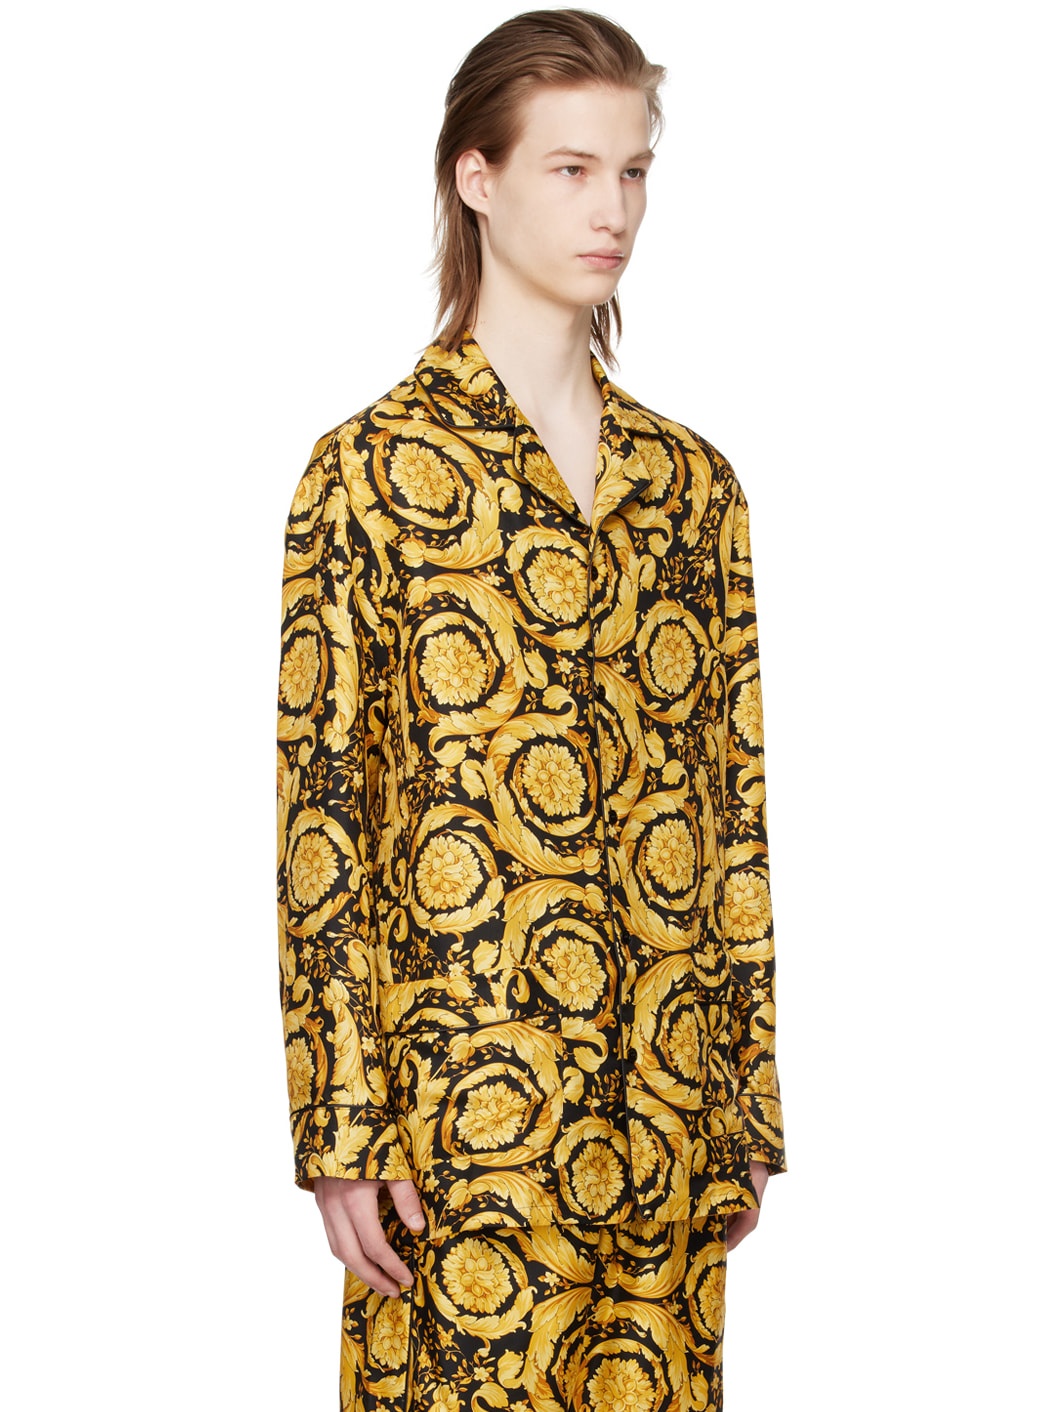 Black & Yellow Barocco Pyjama Shirt - 2